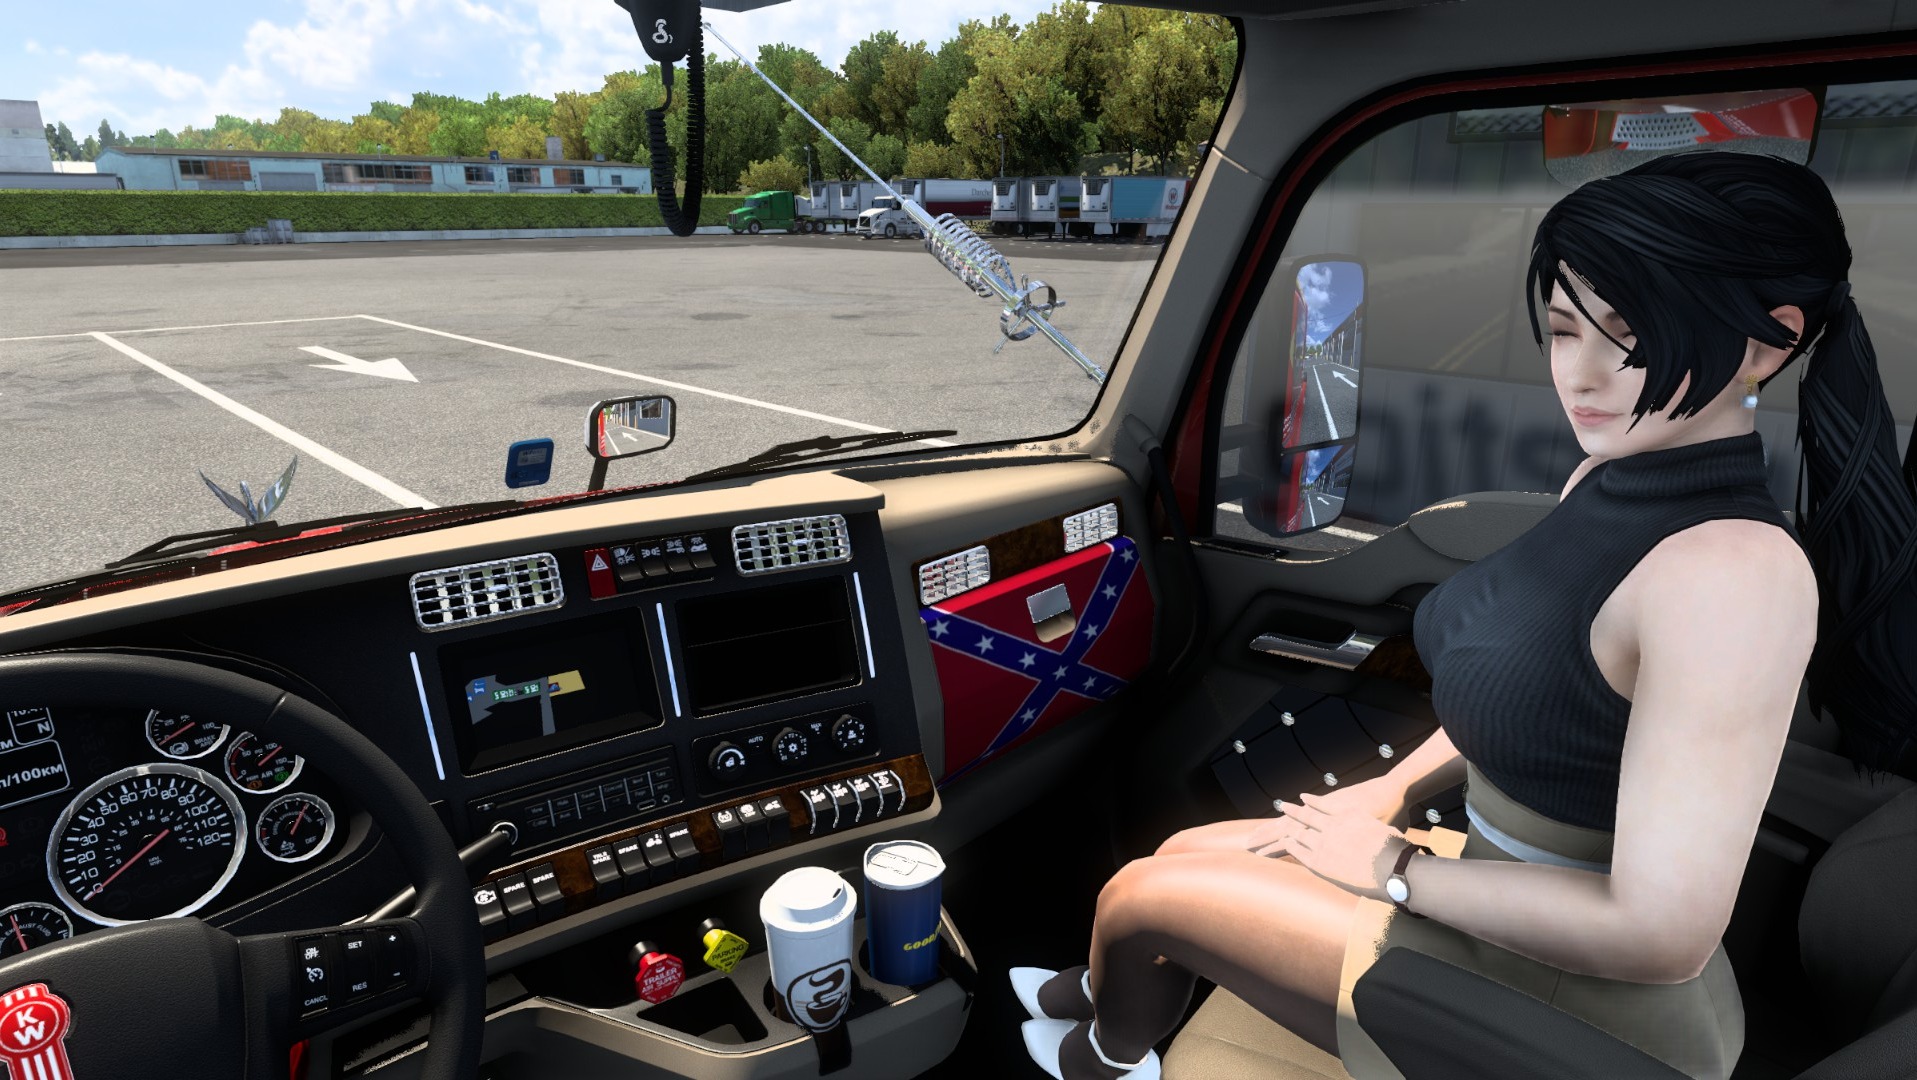 american truck simulator